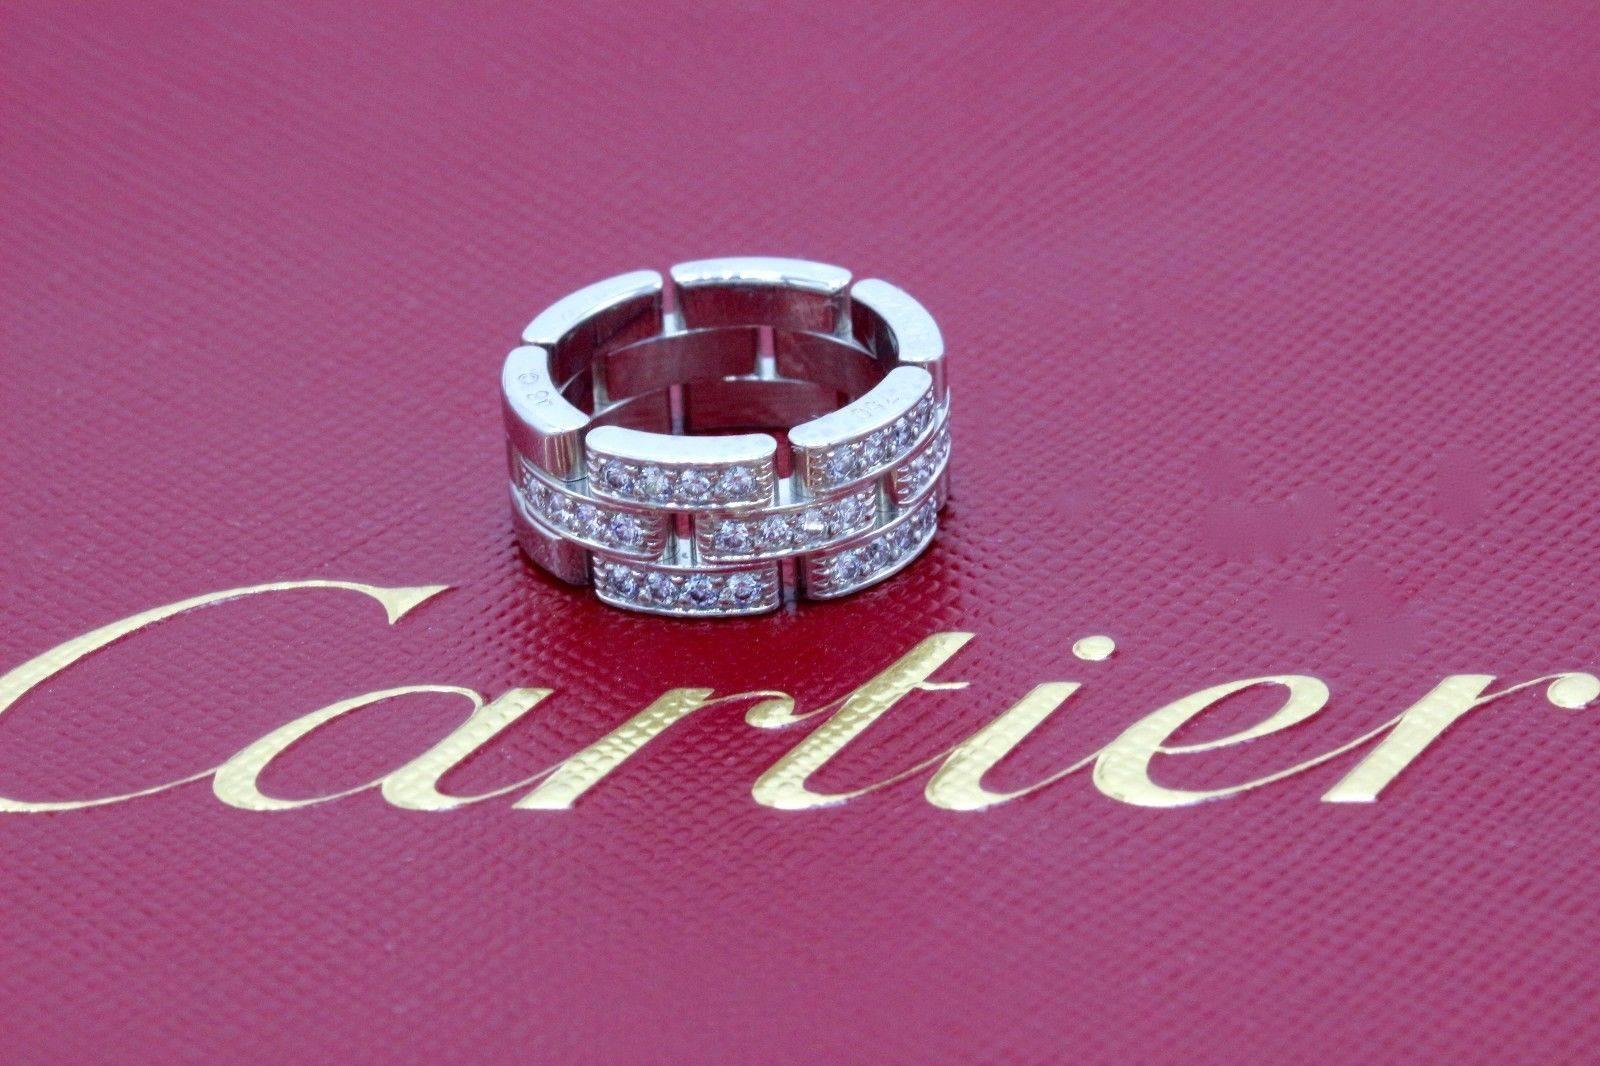 Marke: Cartier 
Stil: Links & Ketten
Anschaffungsjahr: 2005
Ring Größe: 48 / 4 U.S
Metall: 18K Weißgold 
Metallreinheit: 750 
Punze: 